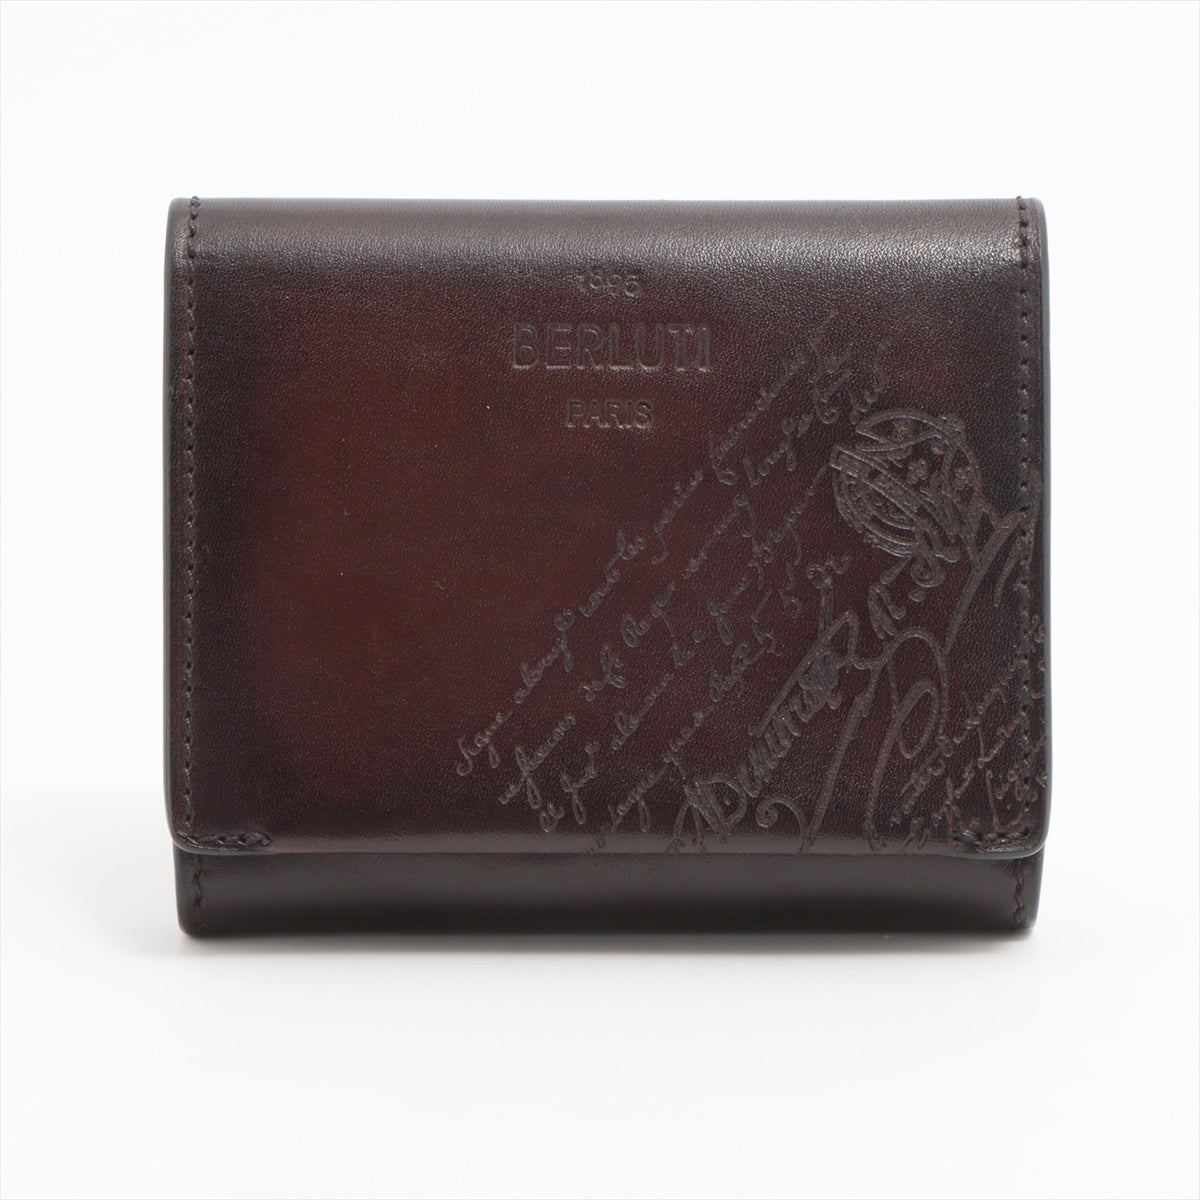 Belotti Caligraphy Leather Wallet Brown